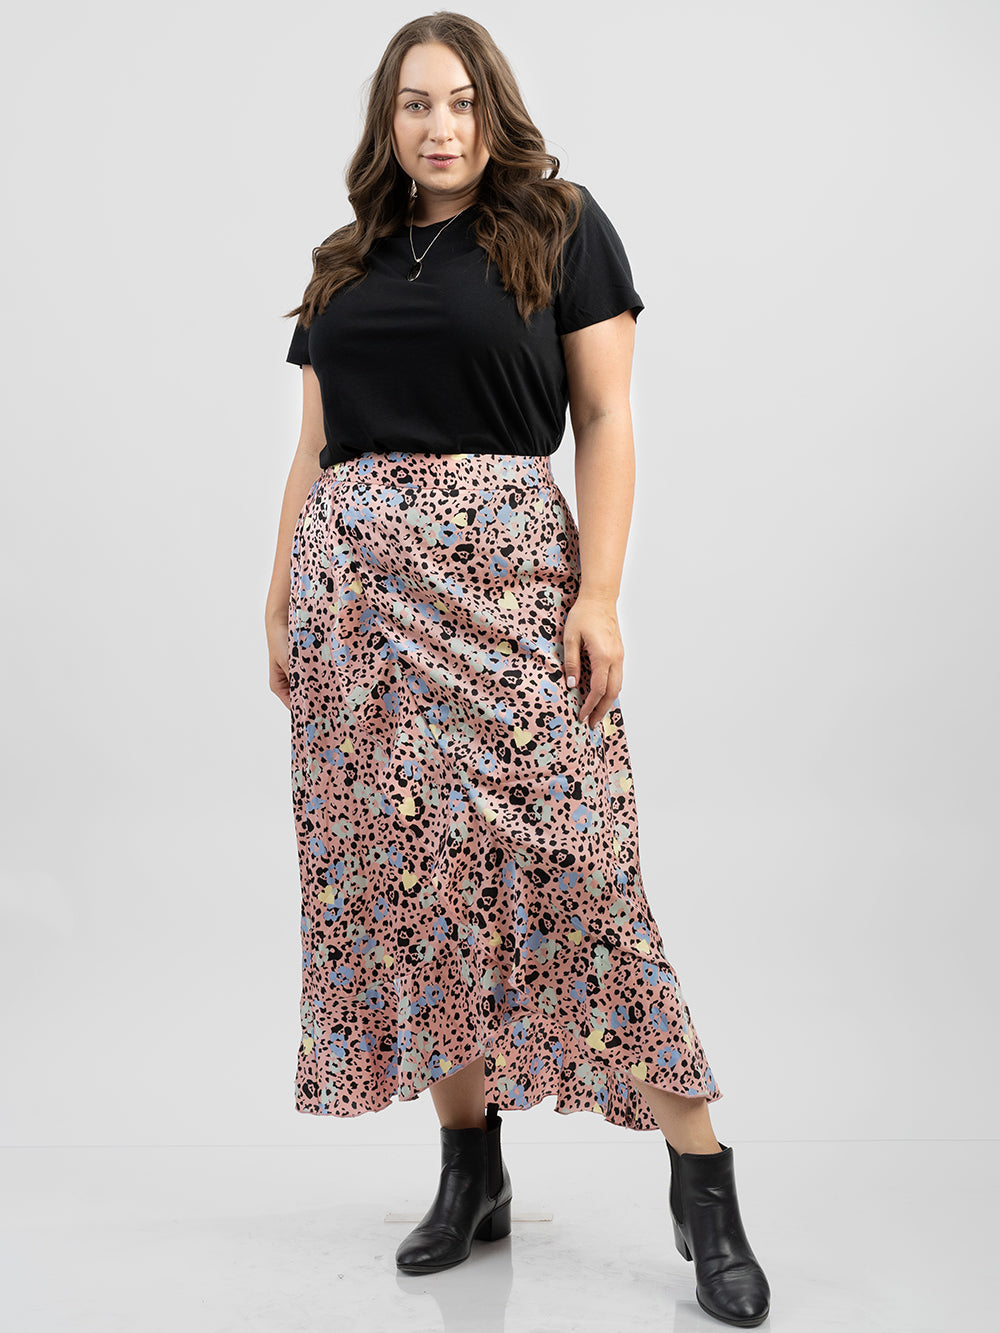 American Bling Plus Size Women’s Luxury Leopard Print Satin Frill Midi Skirt - Montana West World